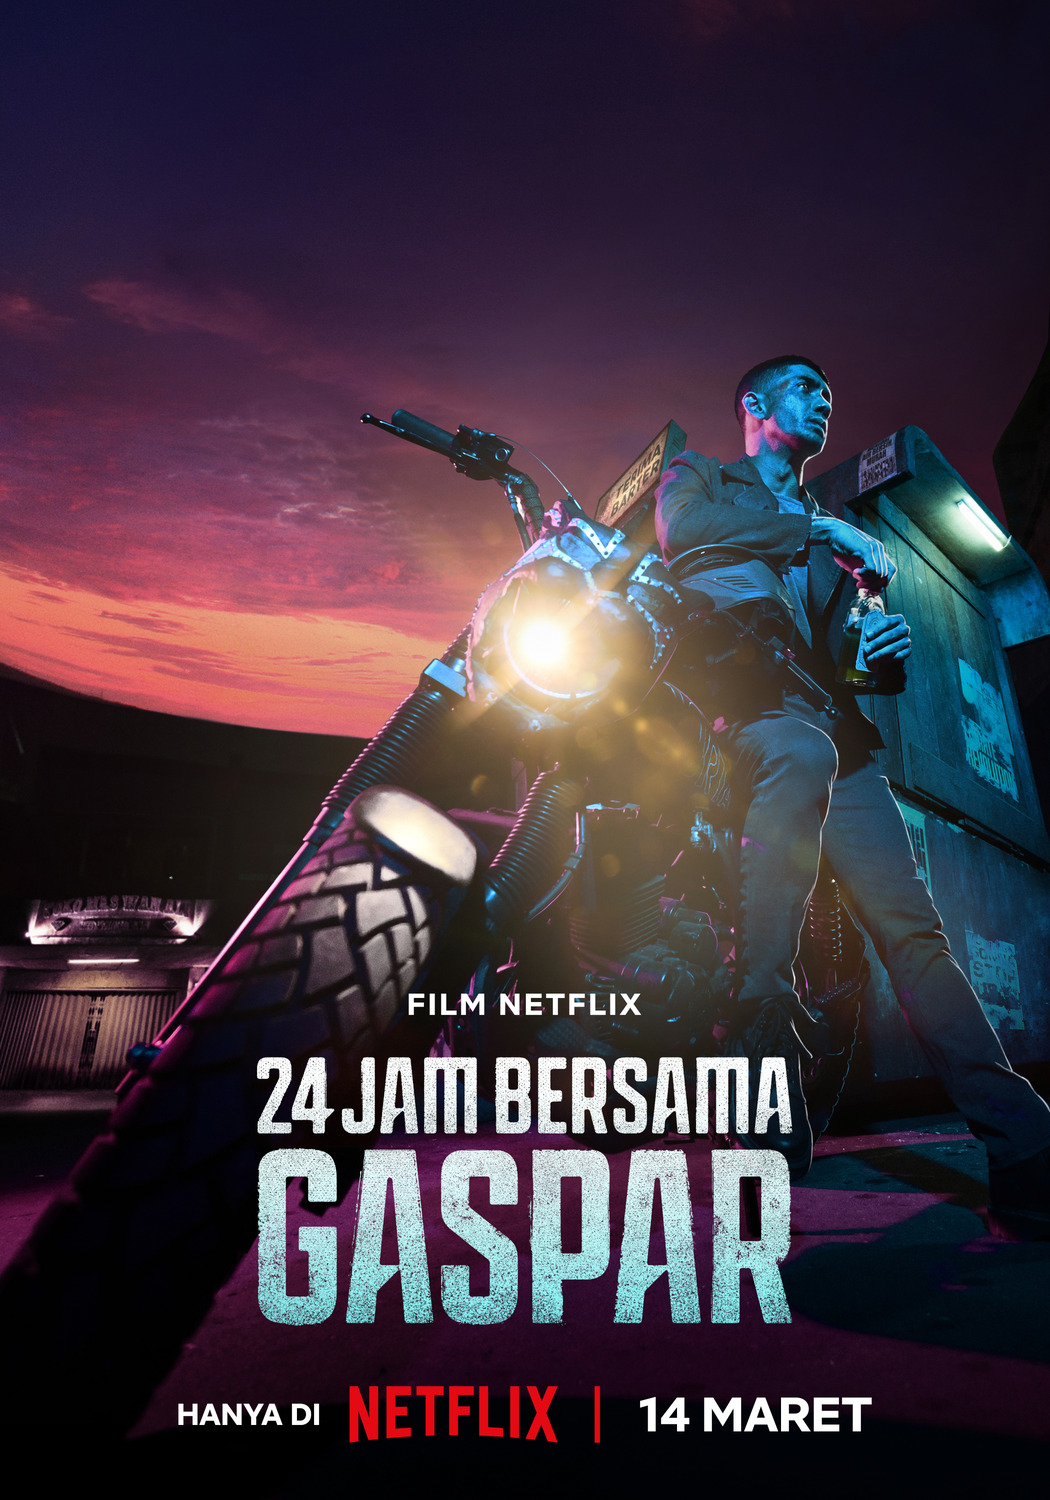 Extra Large Movie Poster Image for 24 Jam Bersama Gaspar (#10 of 10)